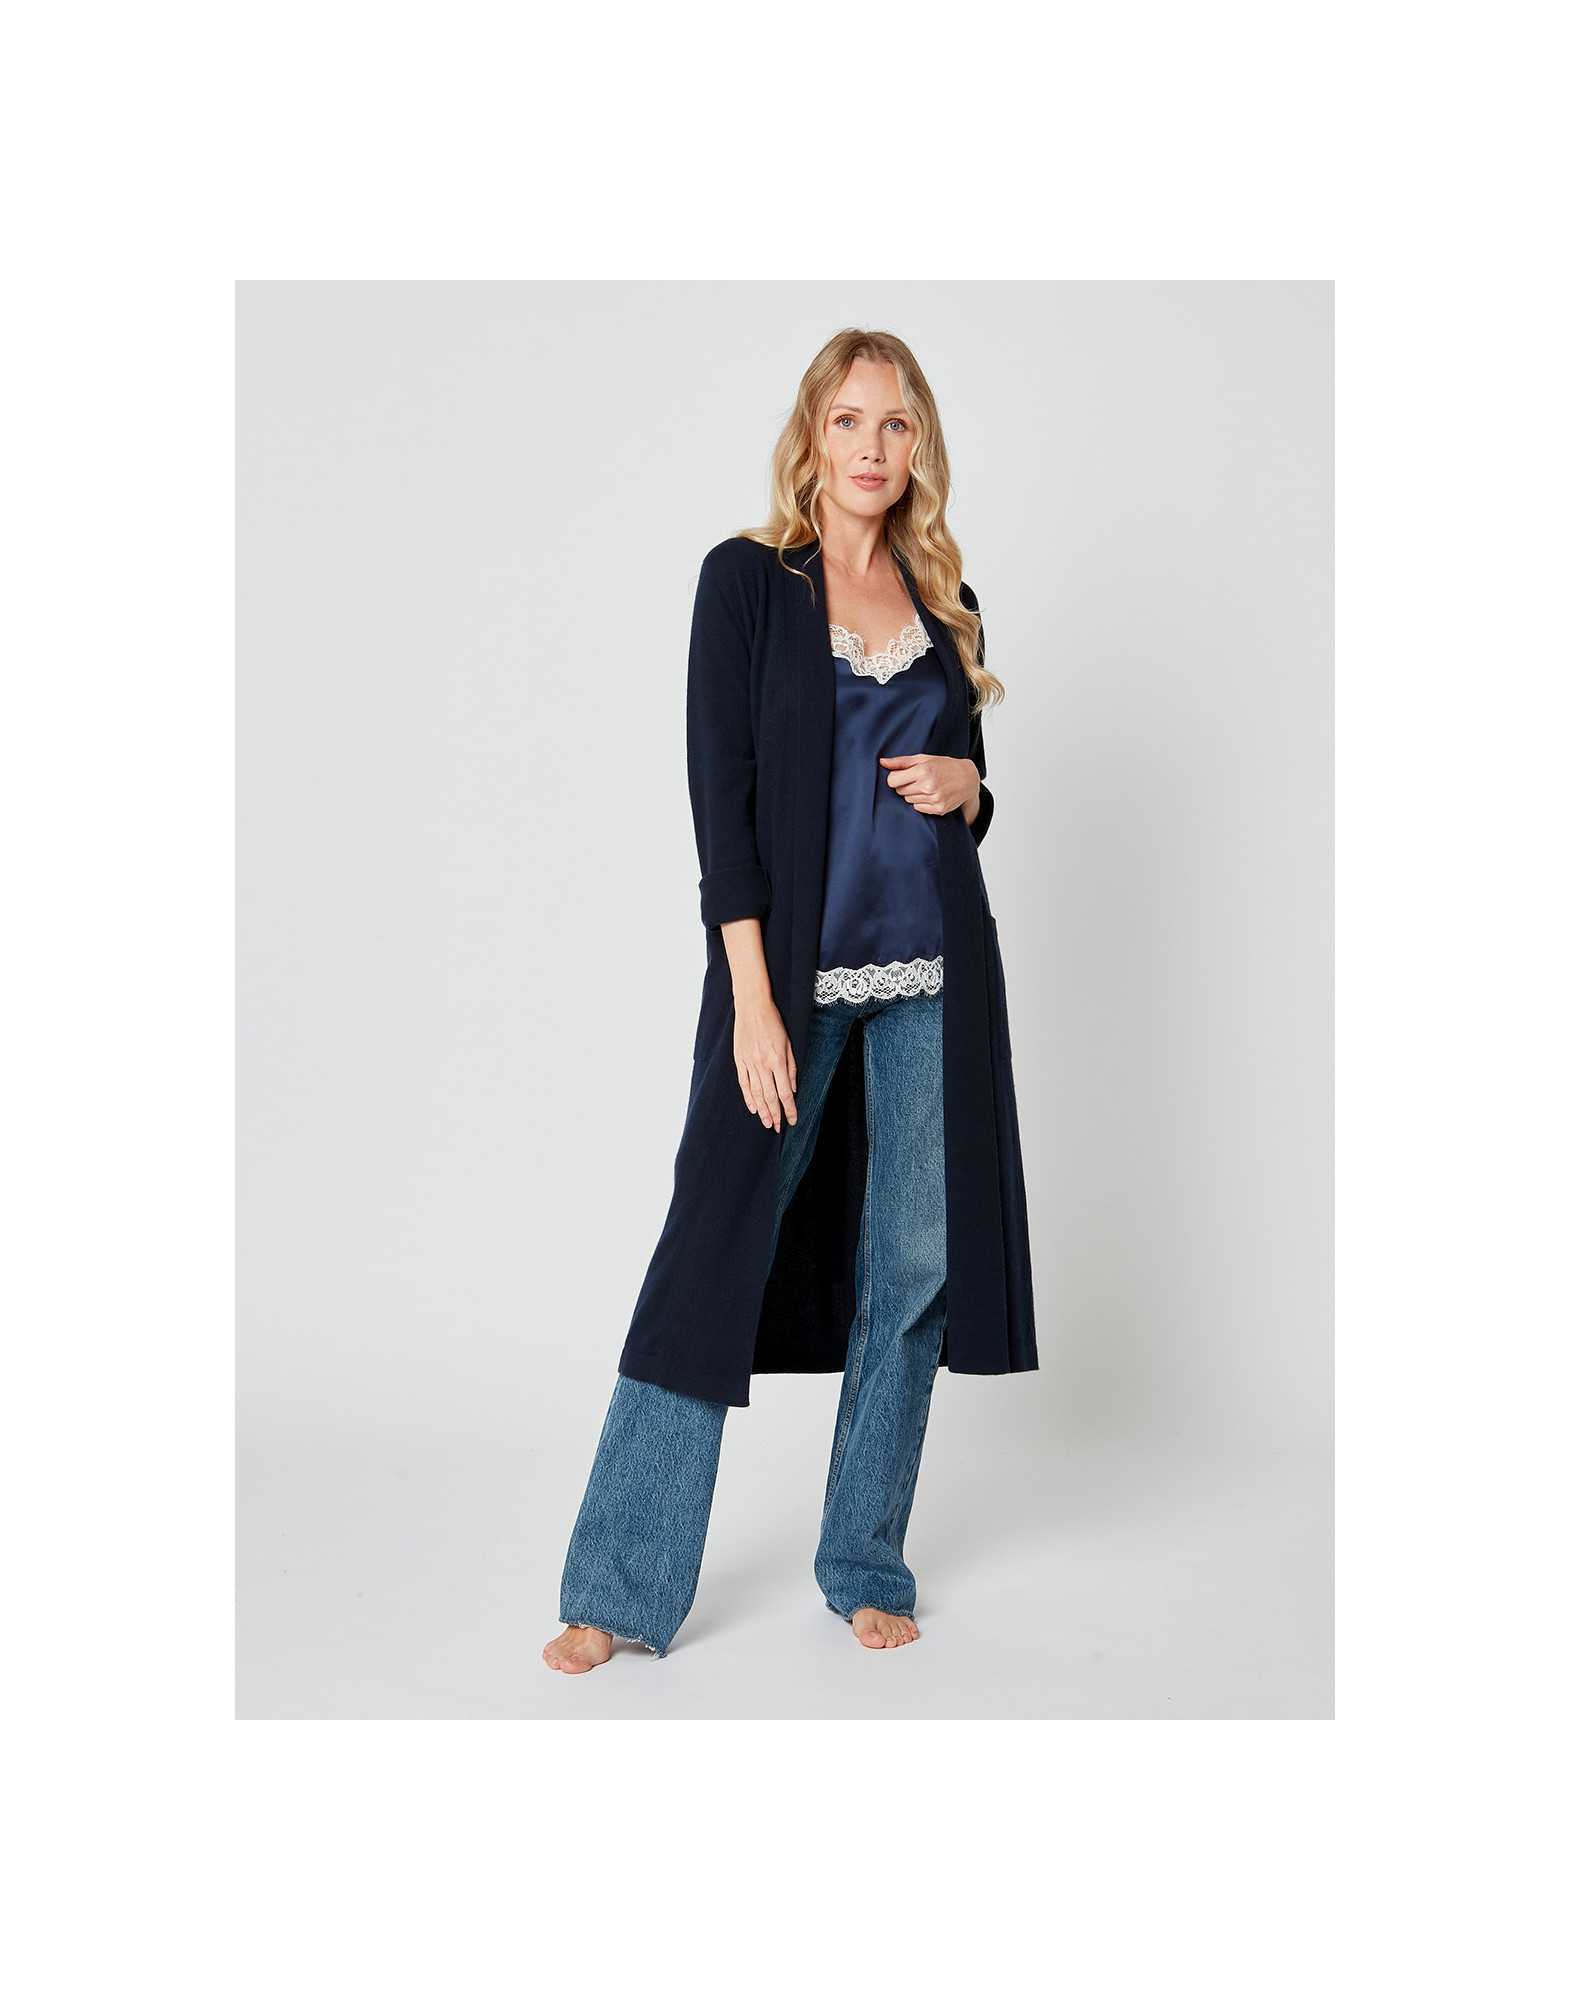 Cashmere bathrobe in navy blue  - Lingerie le Chat